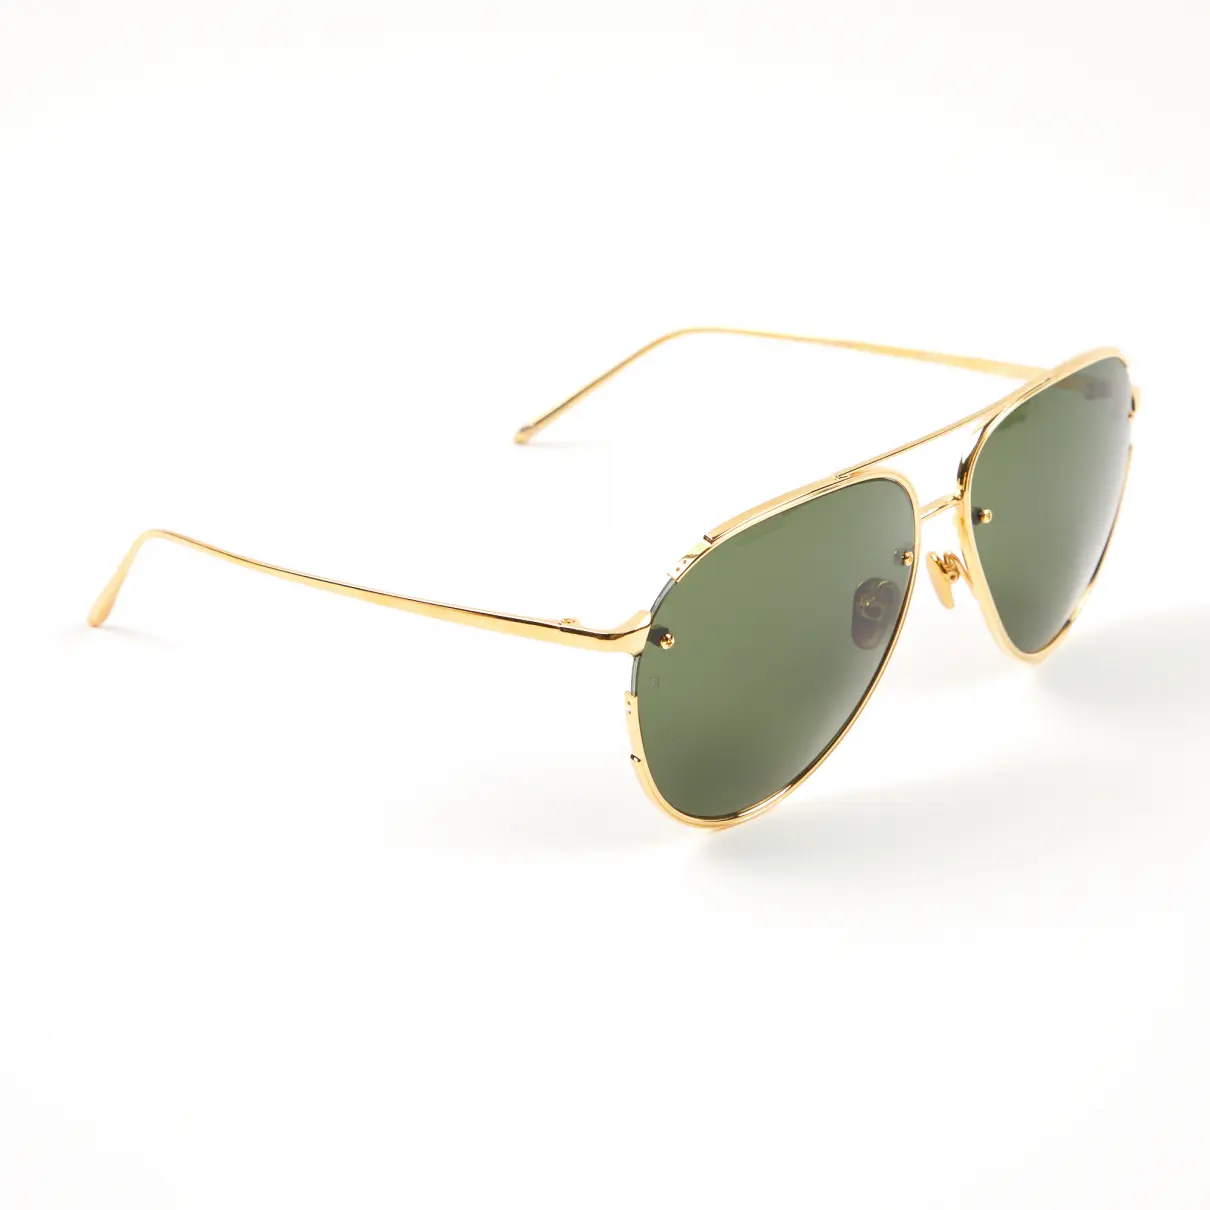 Buy Linda Farrow Aviator sunglasses online